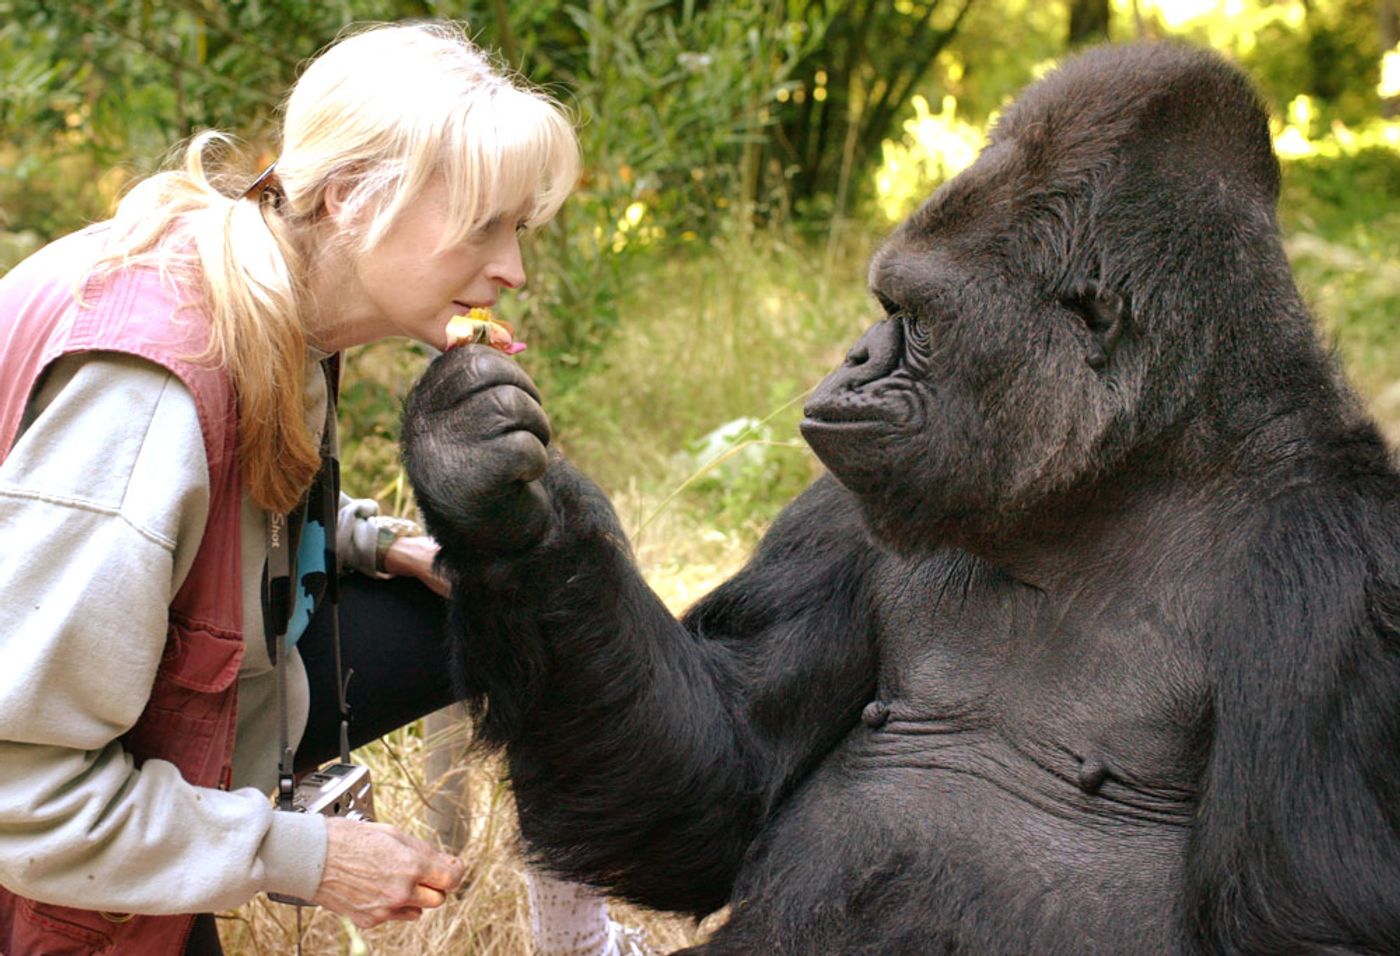 Koko with one of her caretakers.